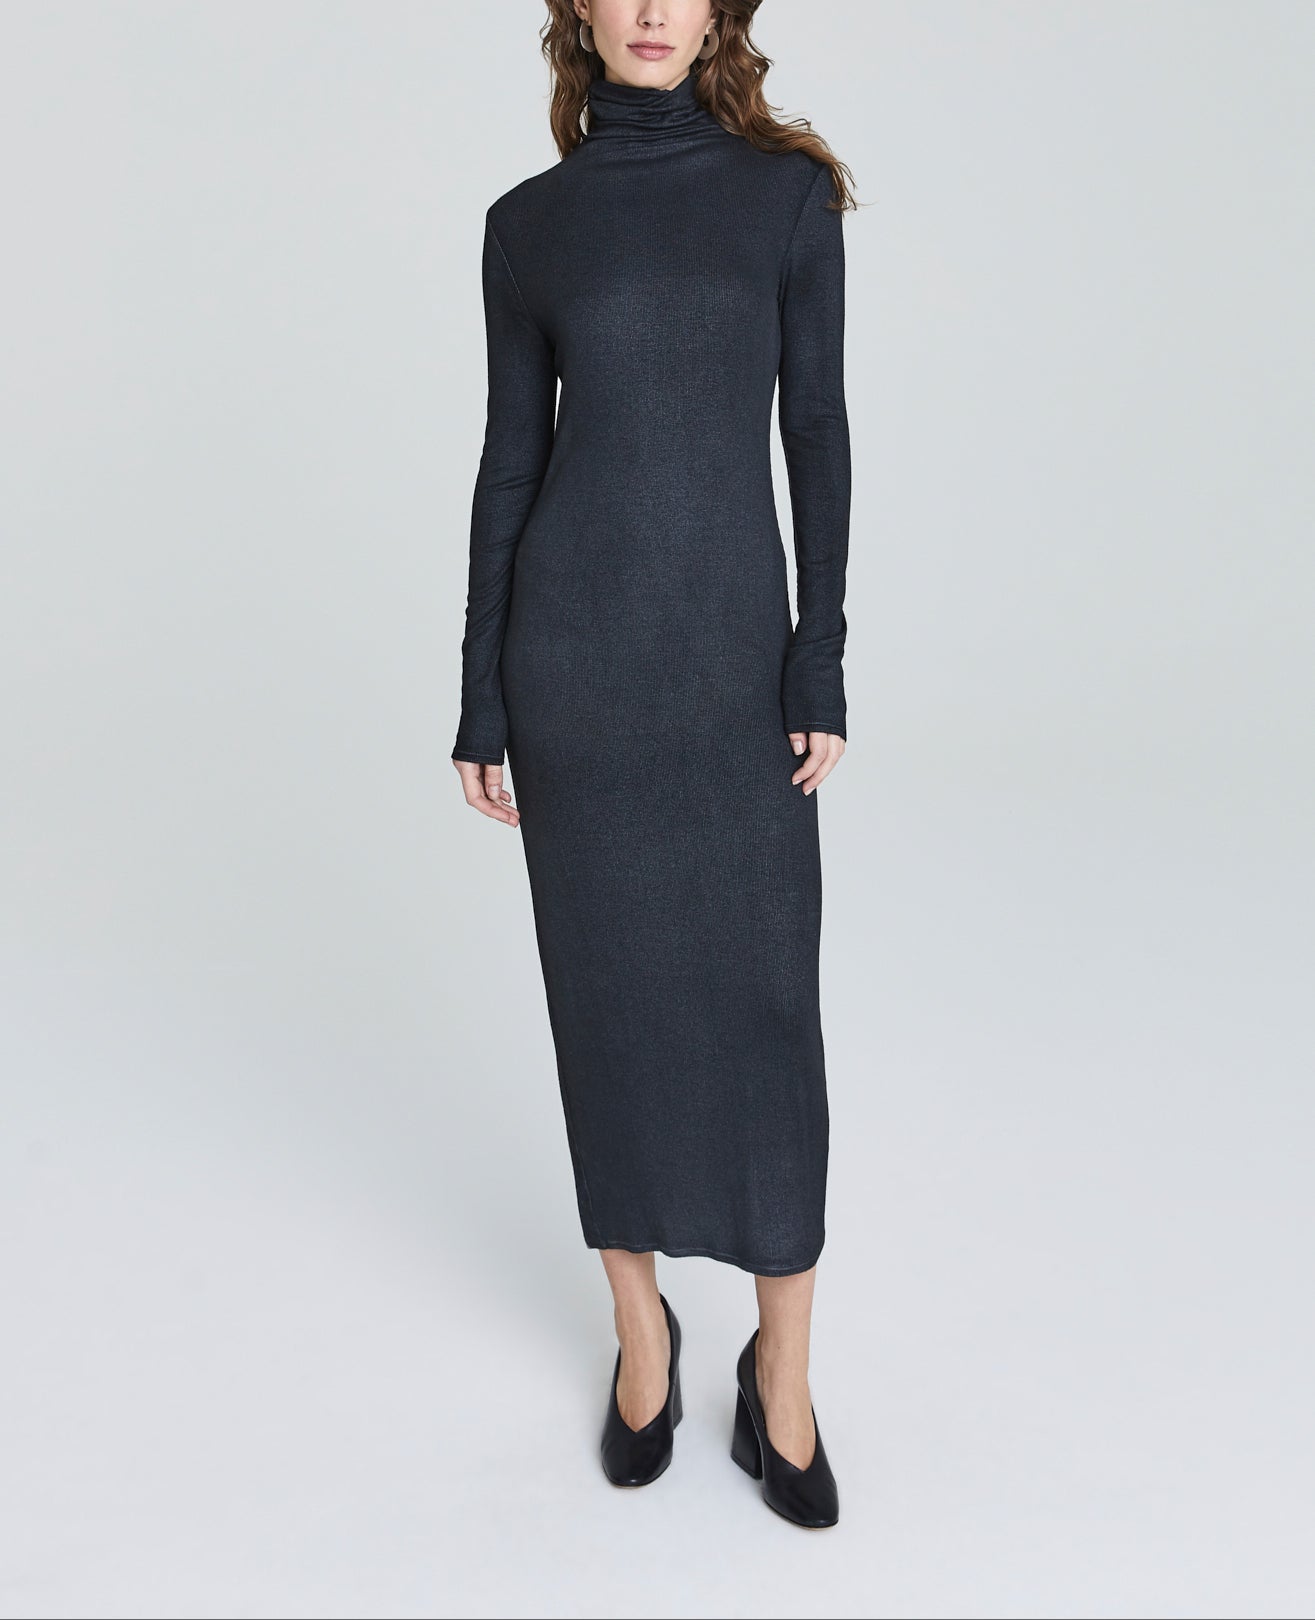 Chelden Dress Metallic True Black Maxi Dress Women Onepiece Photo 1